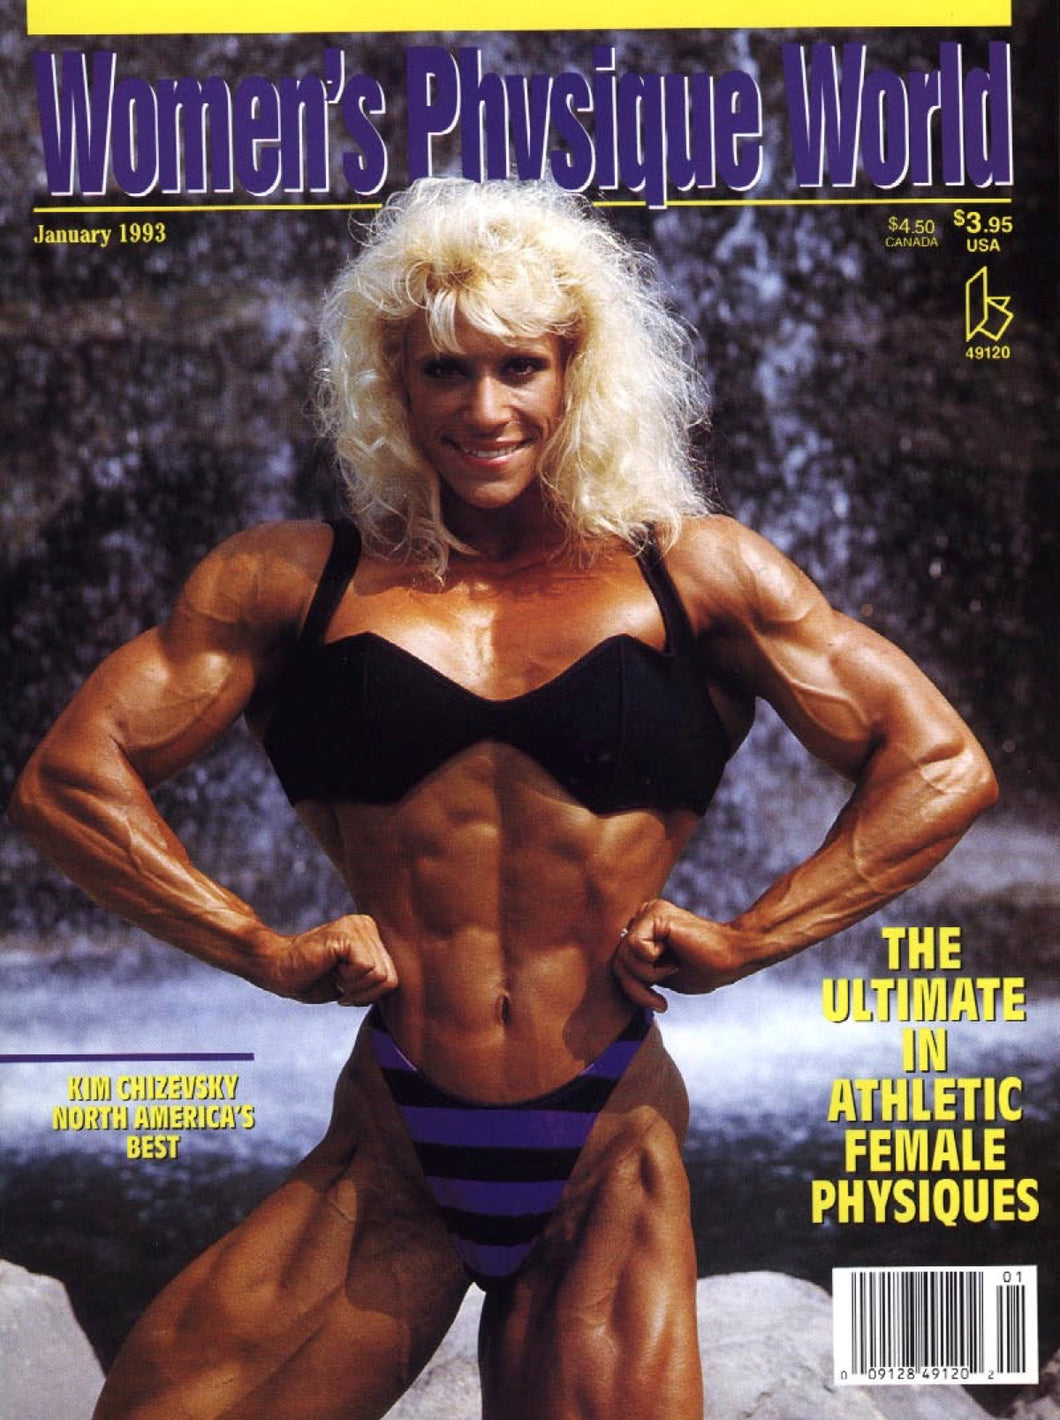 WPW January 1993 Magazine Issue
 [Digital Download]